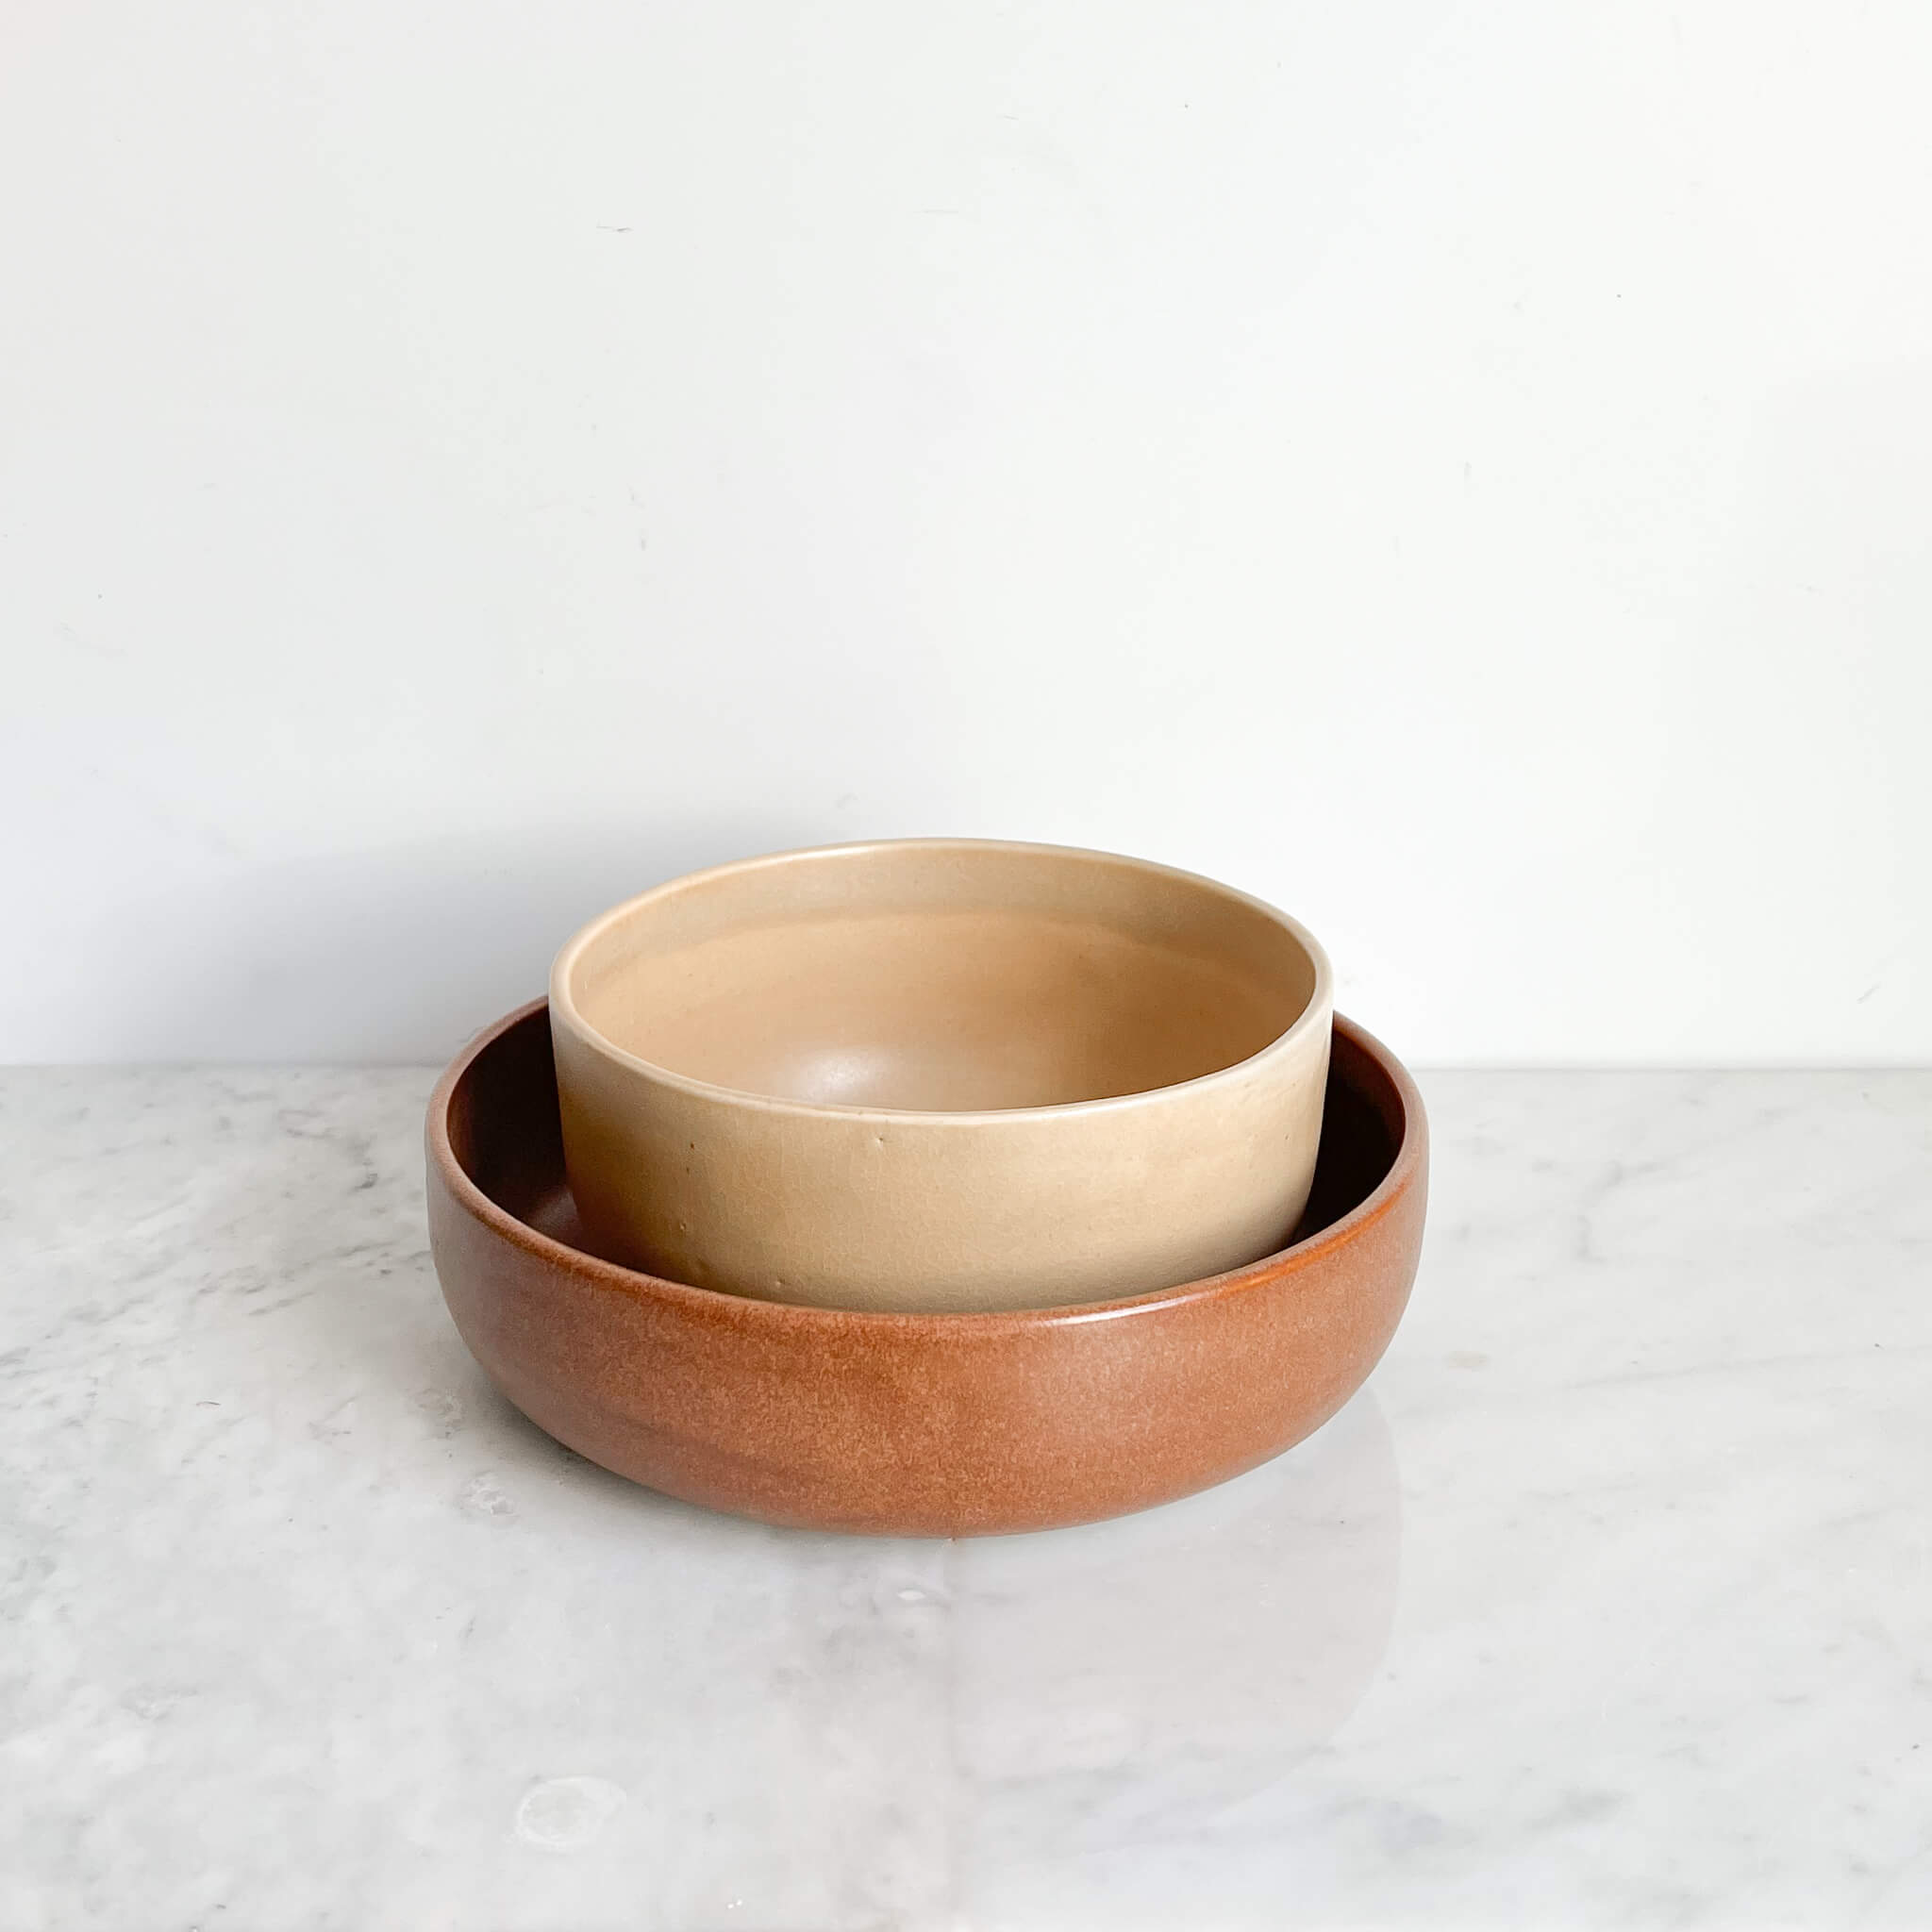 Studio Pottery Matt Finish Ceramic Serving Bowl (Off White and